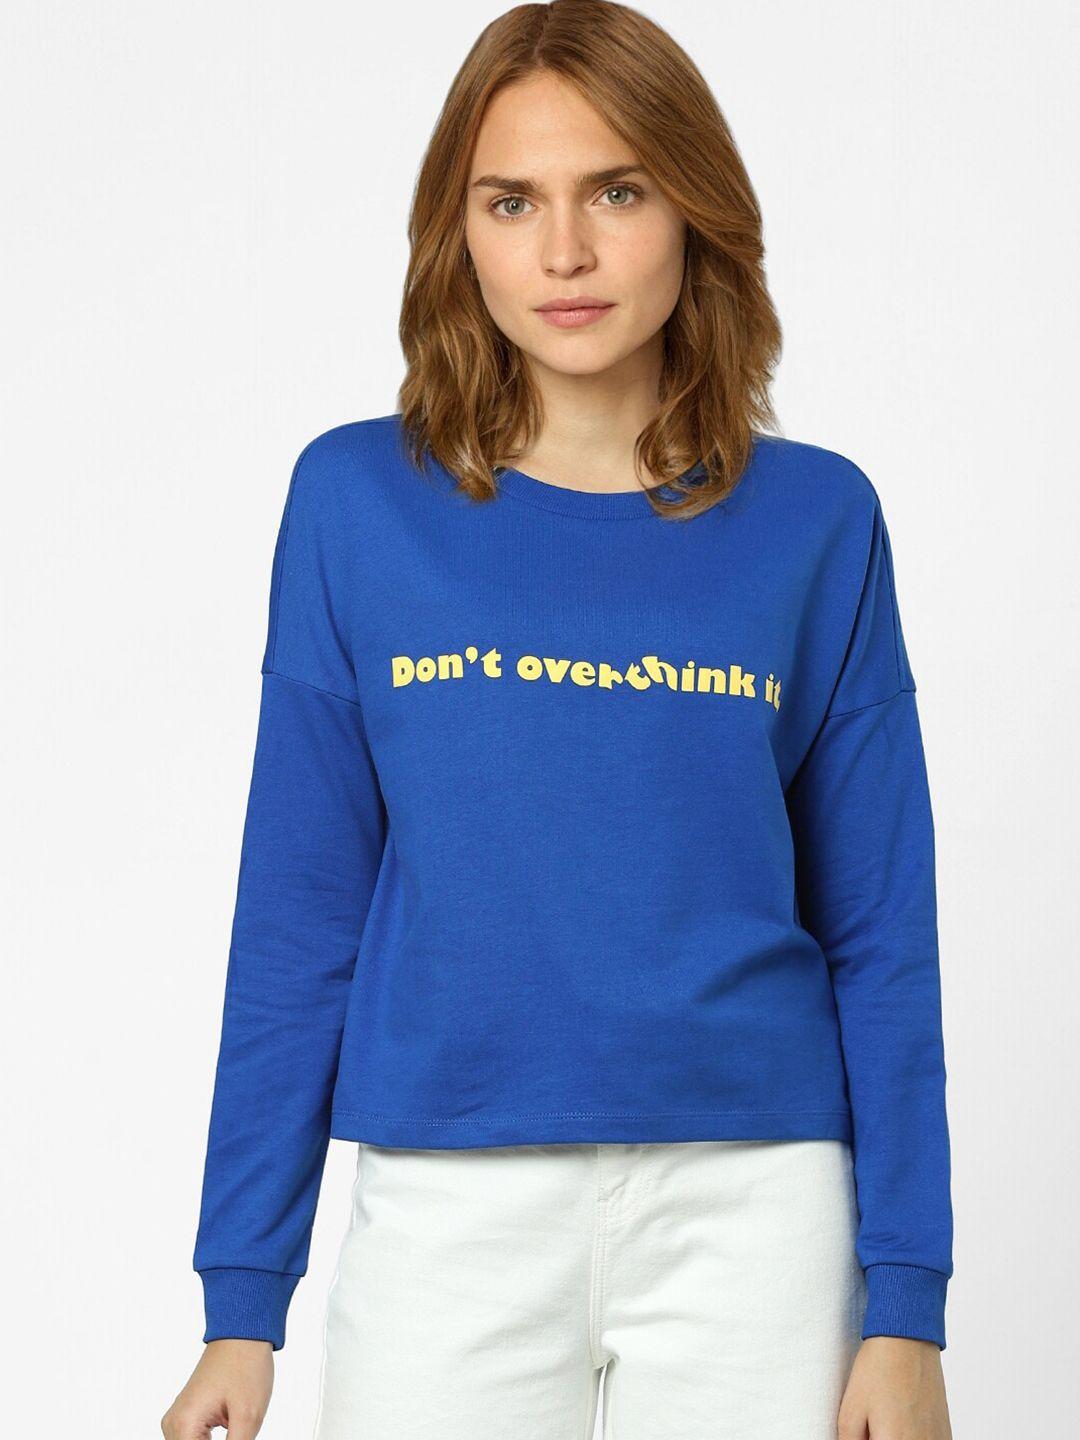 vero moda women blue printed round neck sweatshirt